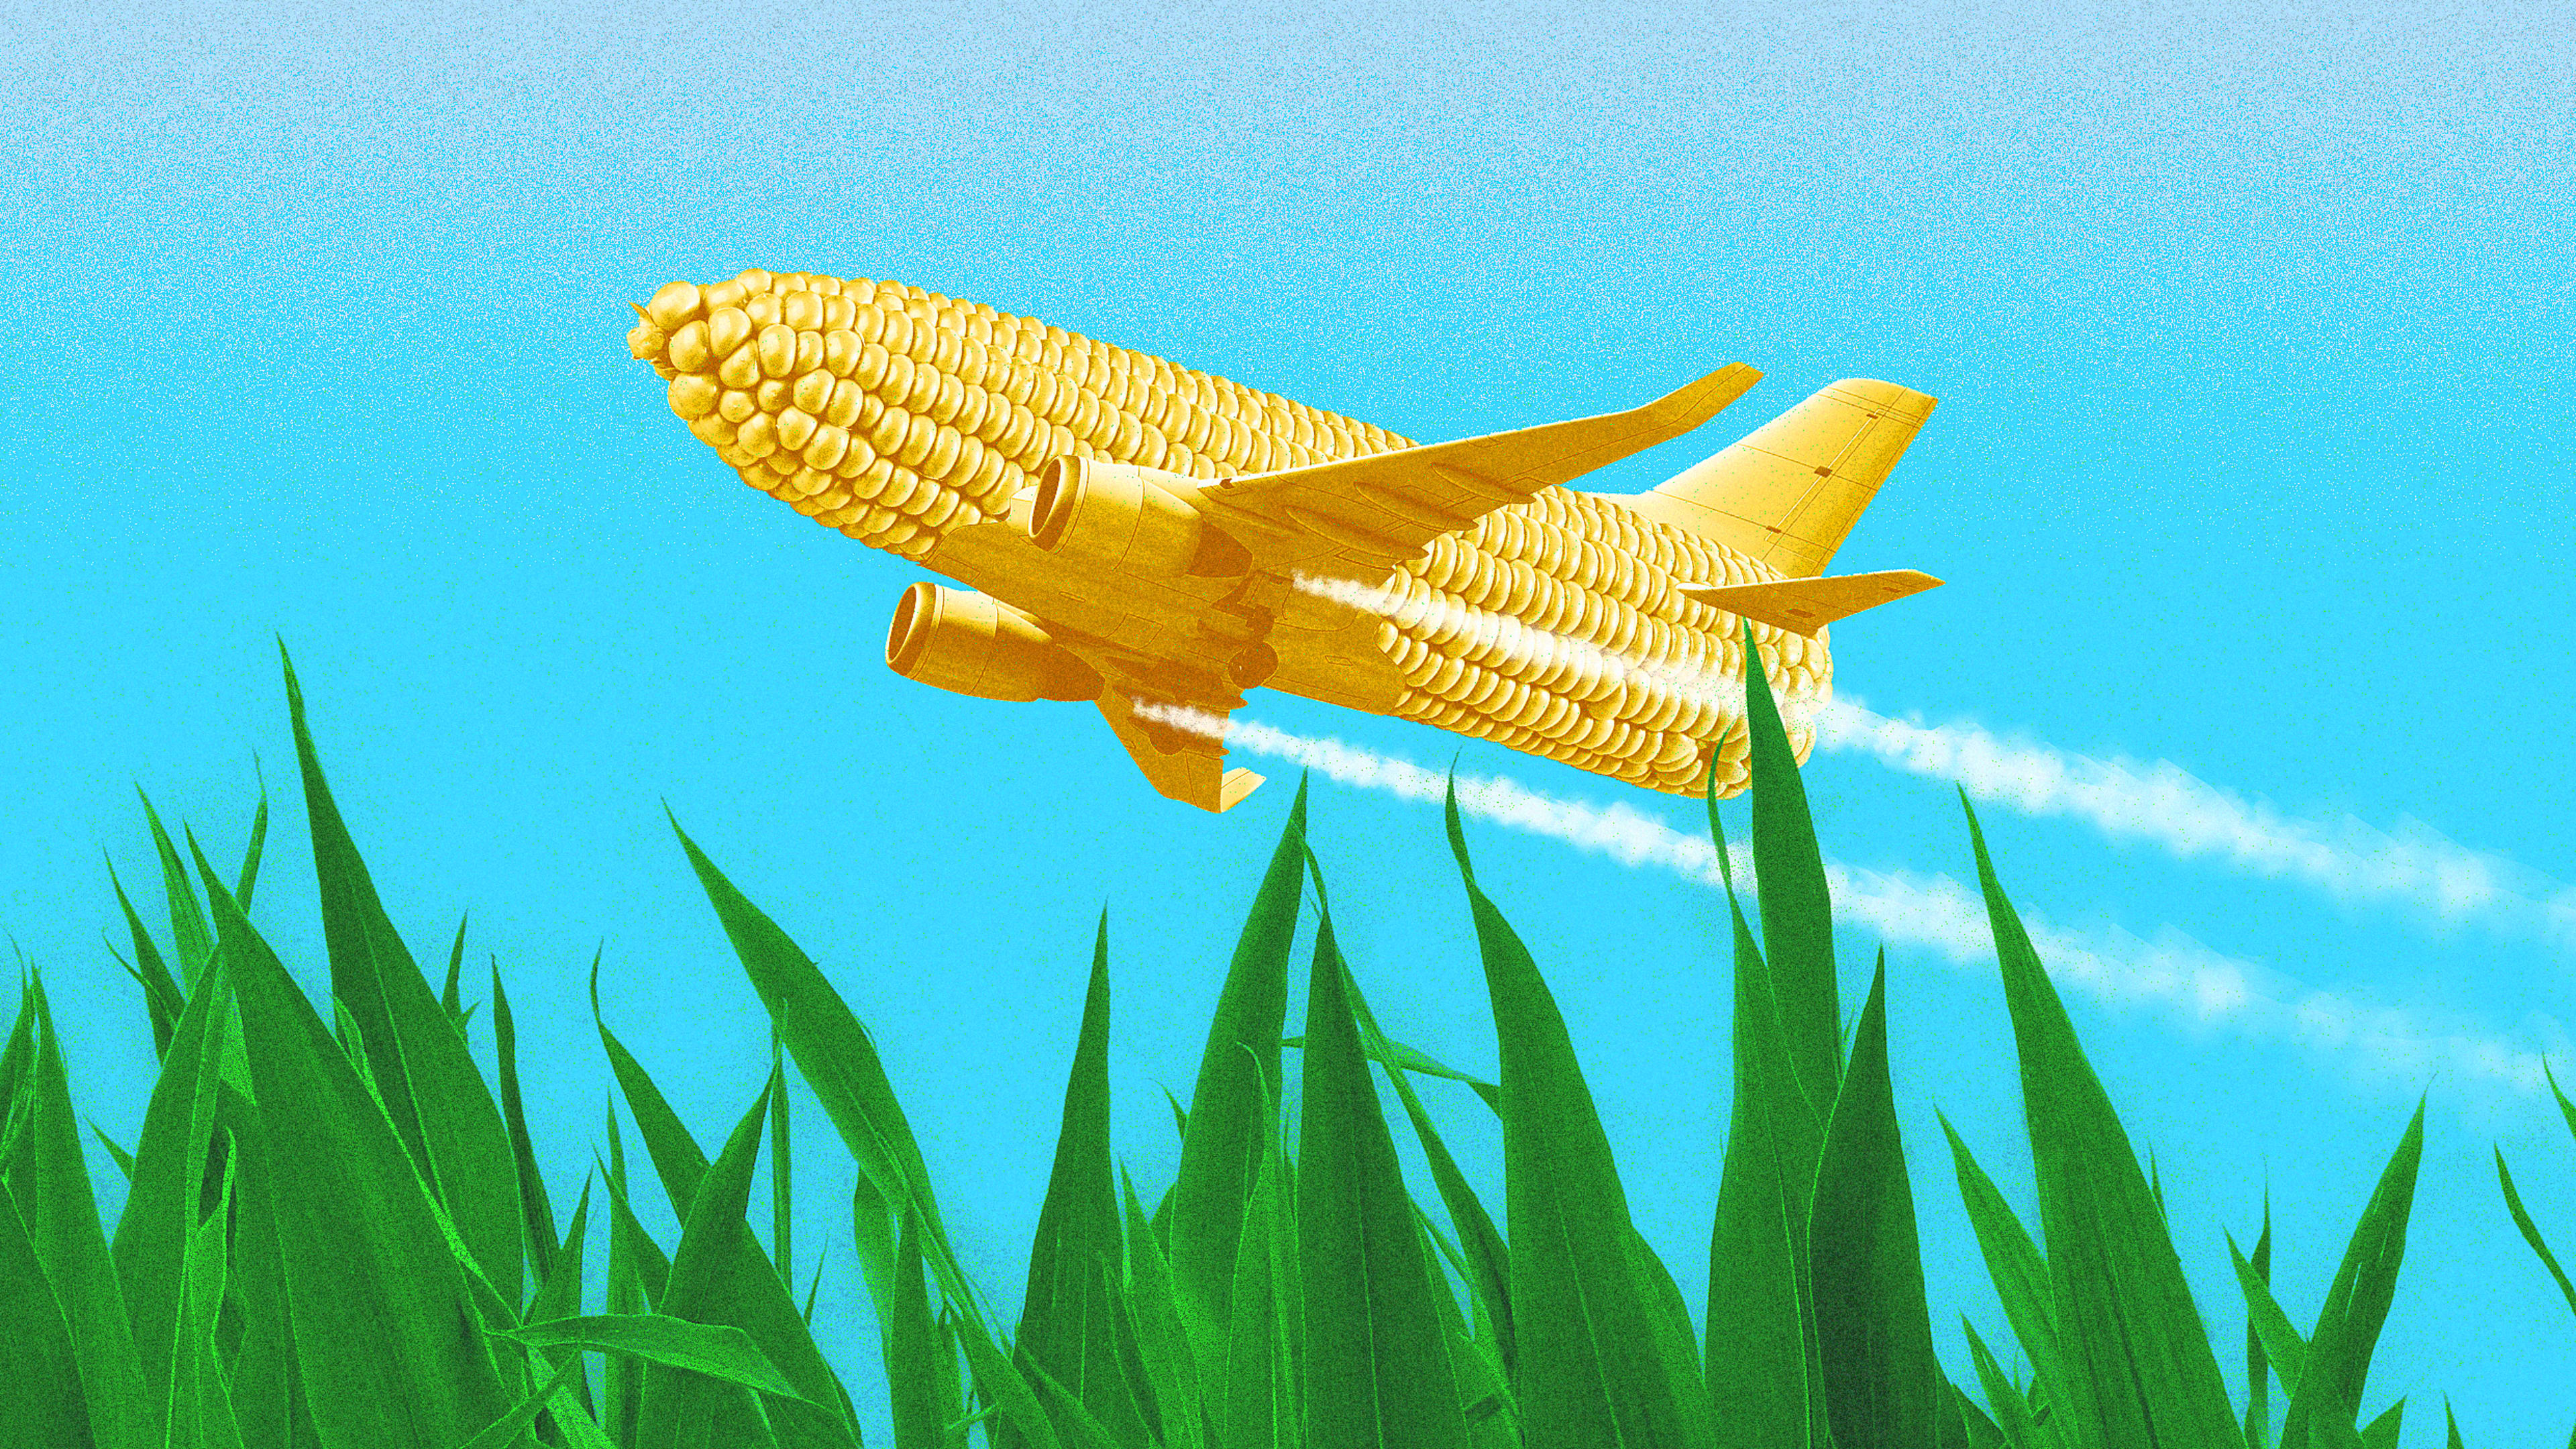 Should we make jet fuel out of corn?